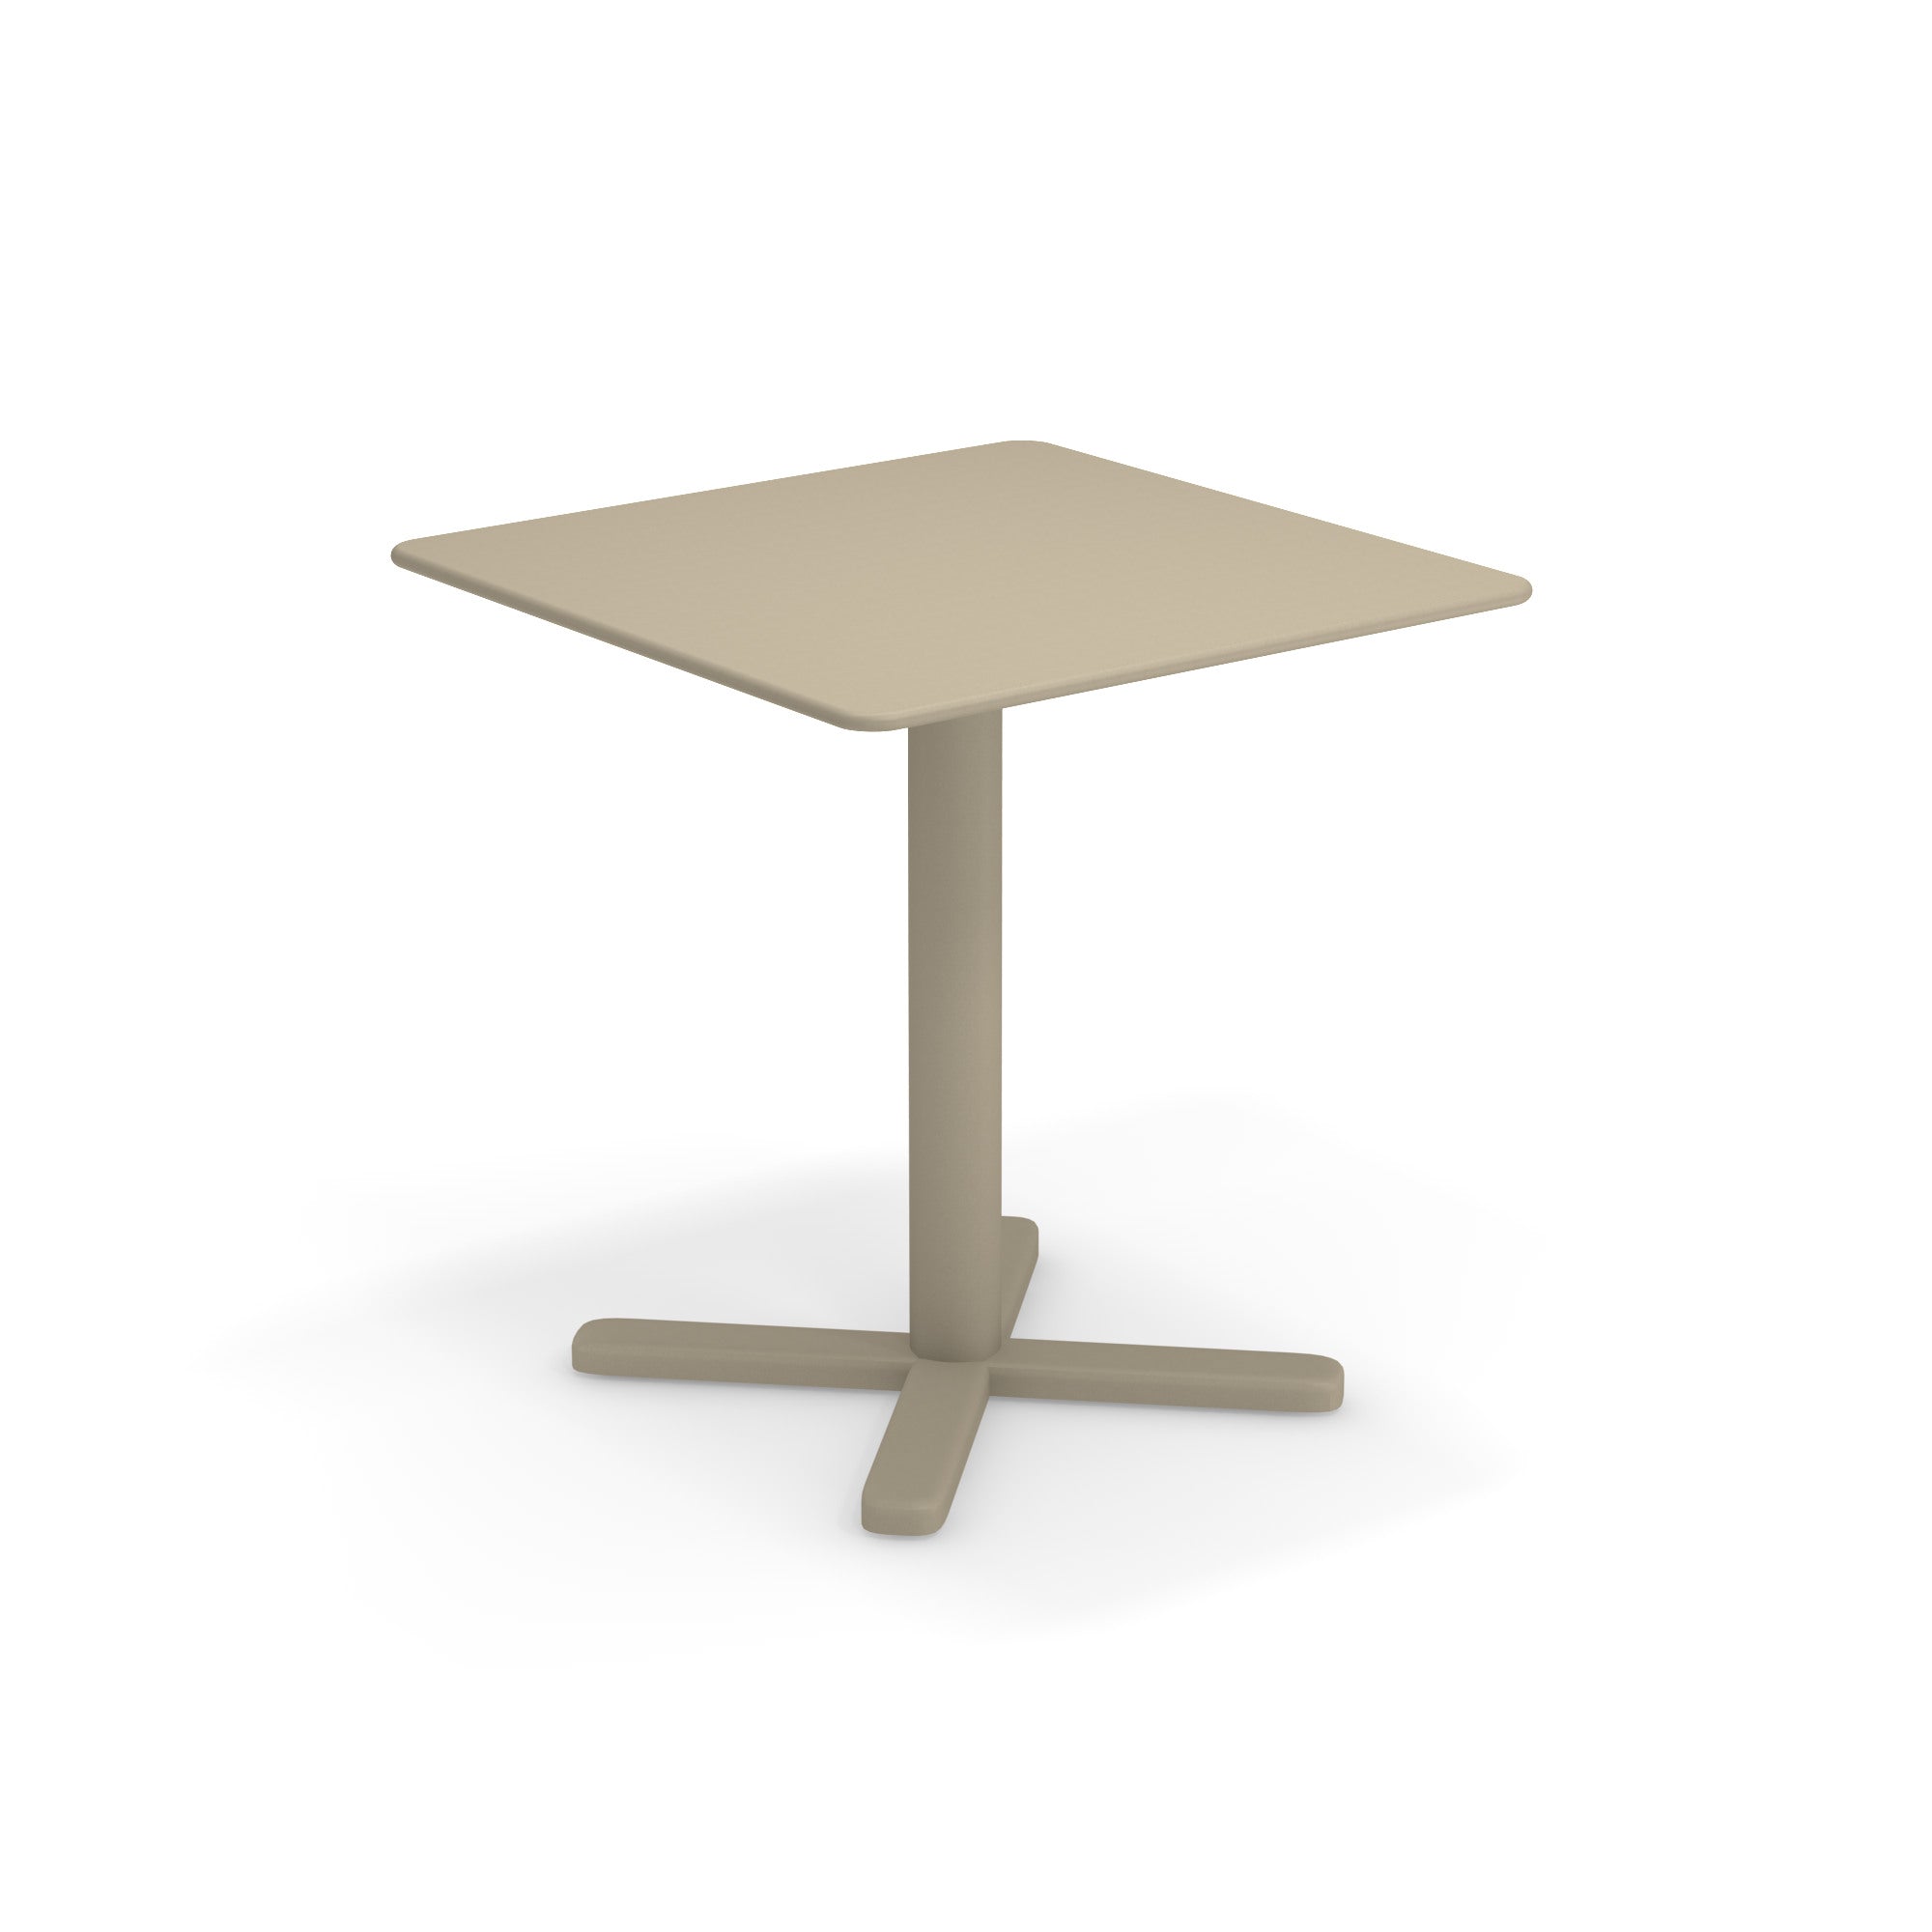 EMU Darwin Square Folding Table (2 Sizes)